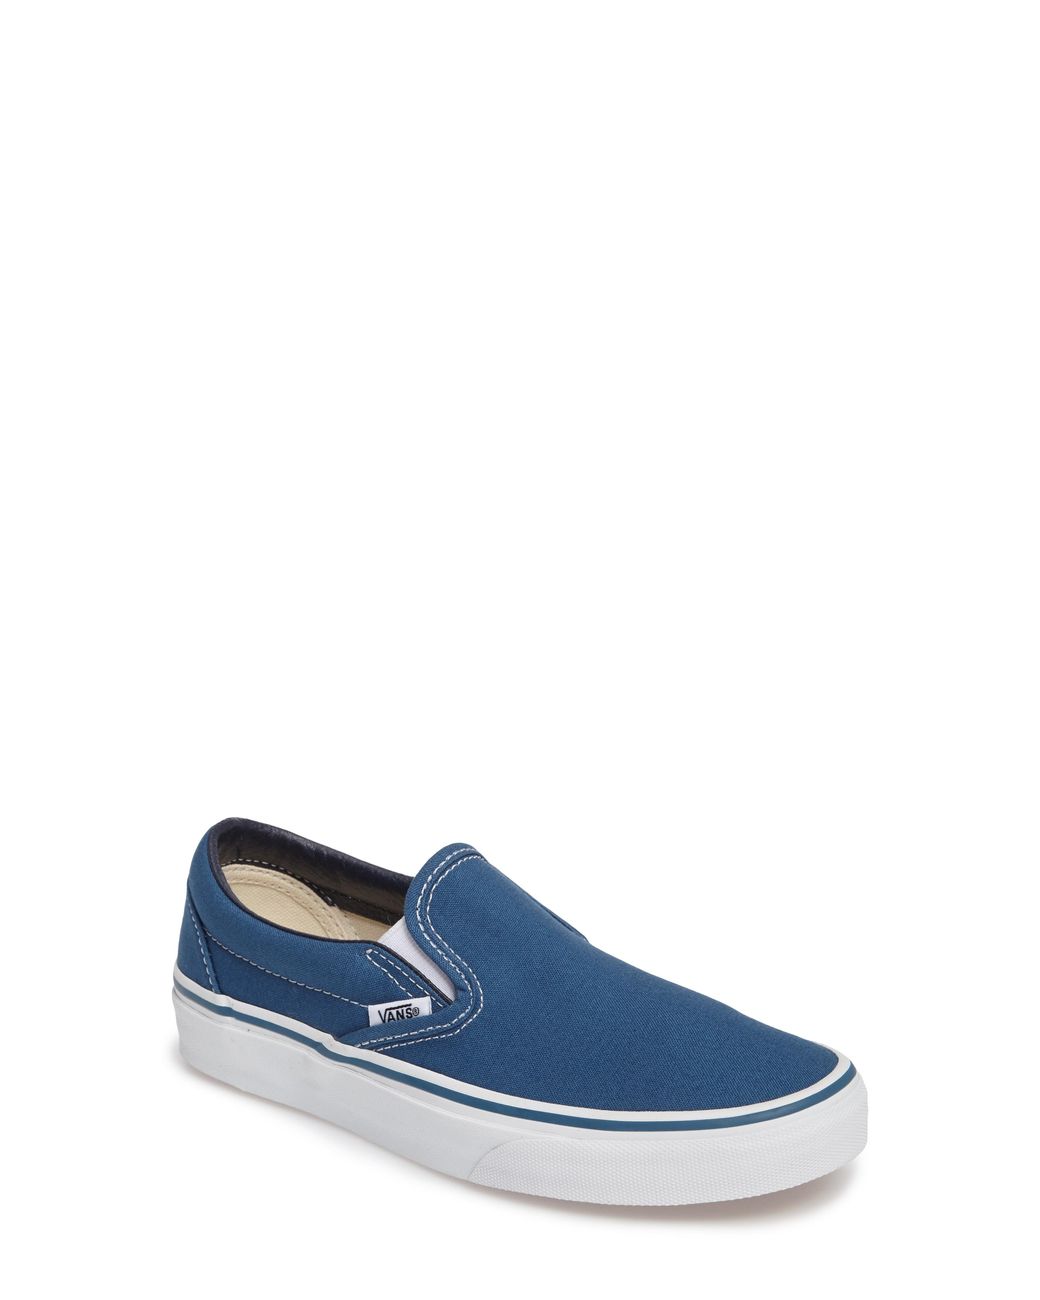 Lyst - Vans Classic Slip-on Sneaker in Blue